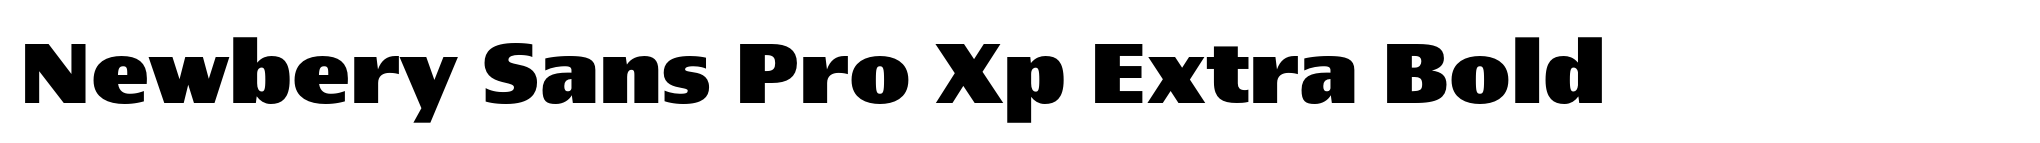 Newbery Sans Pro Xp Extra Bold image